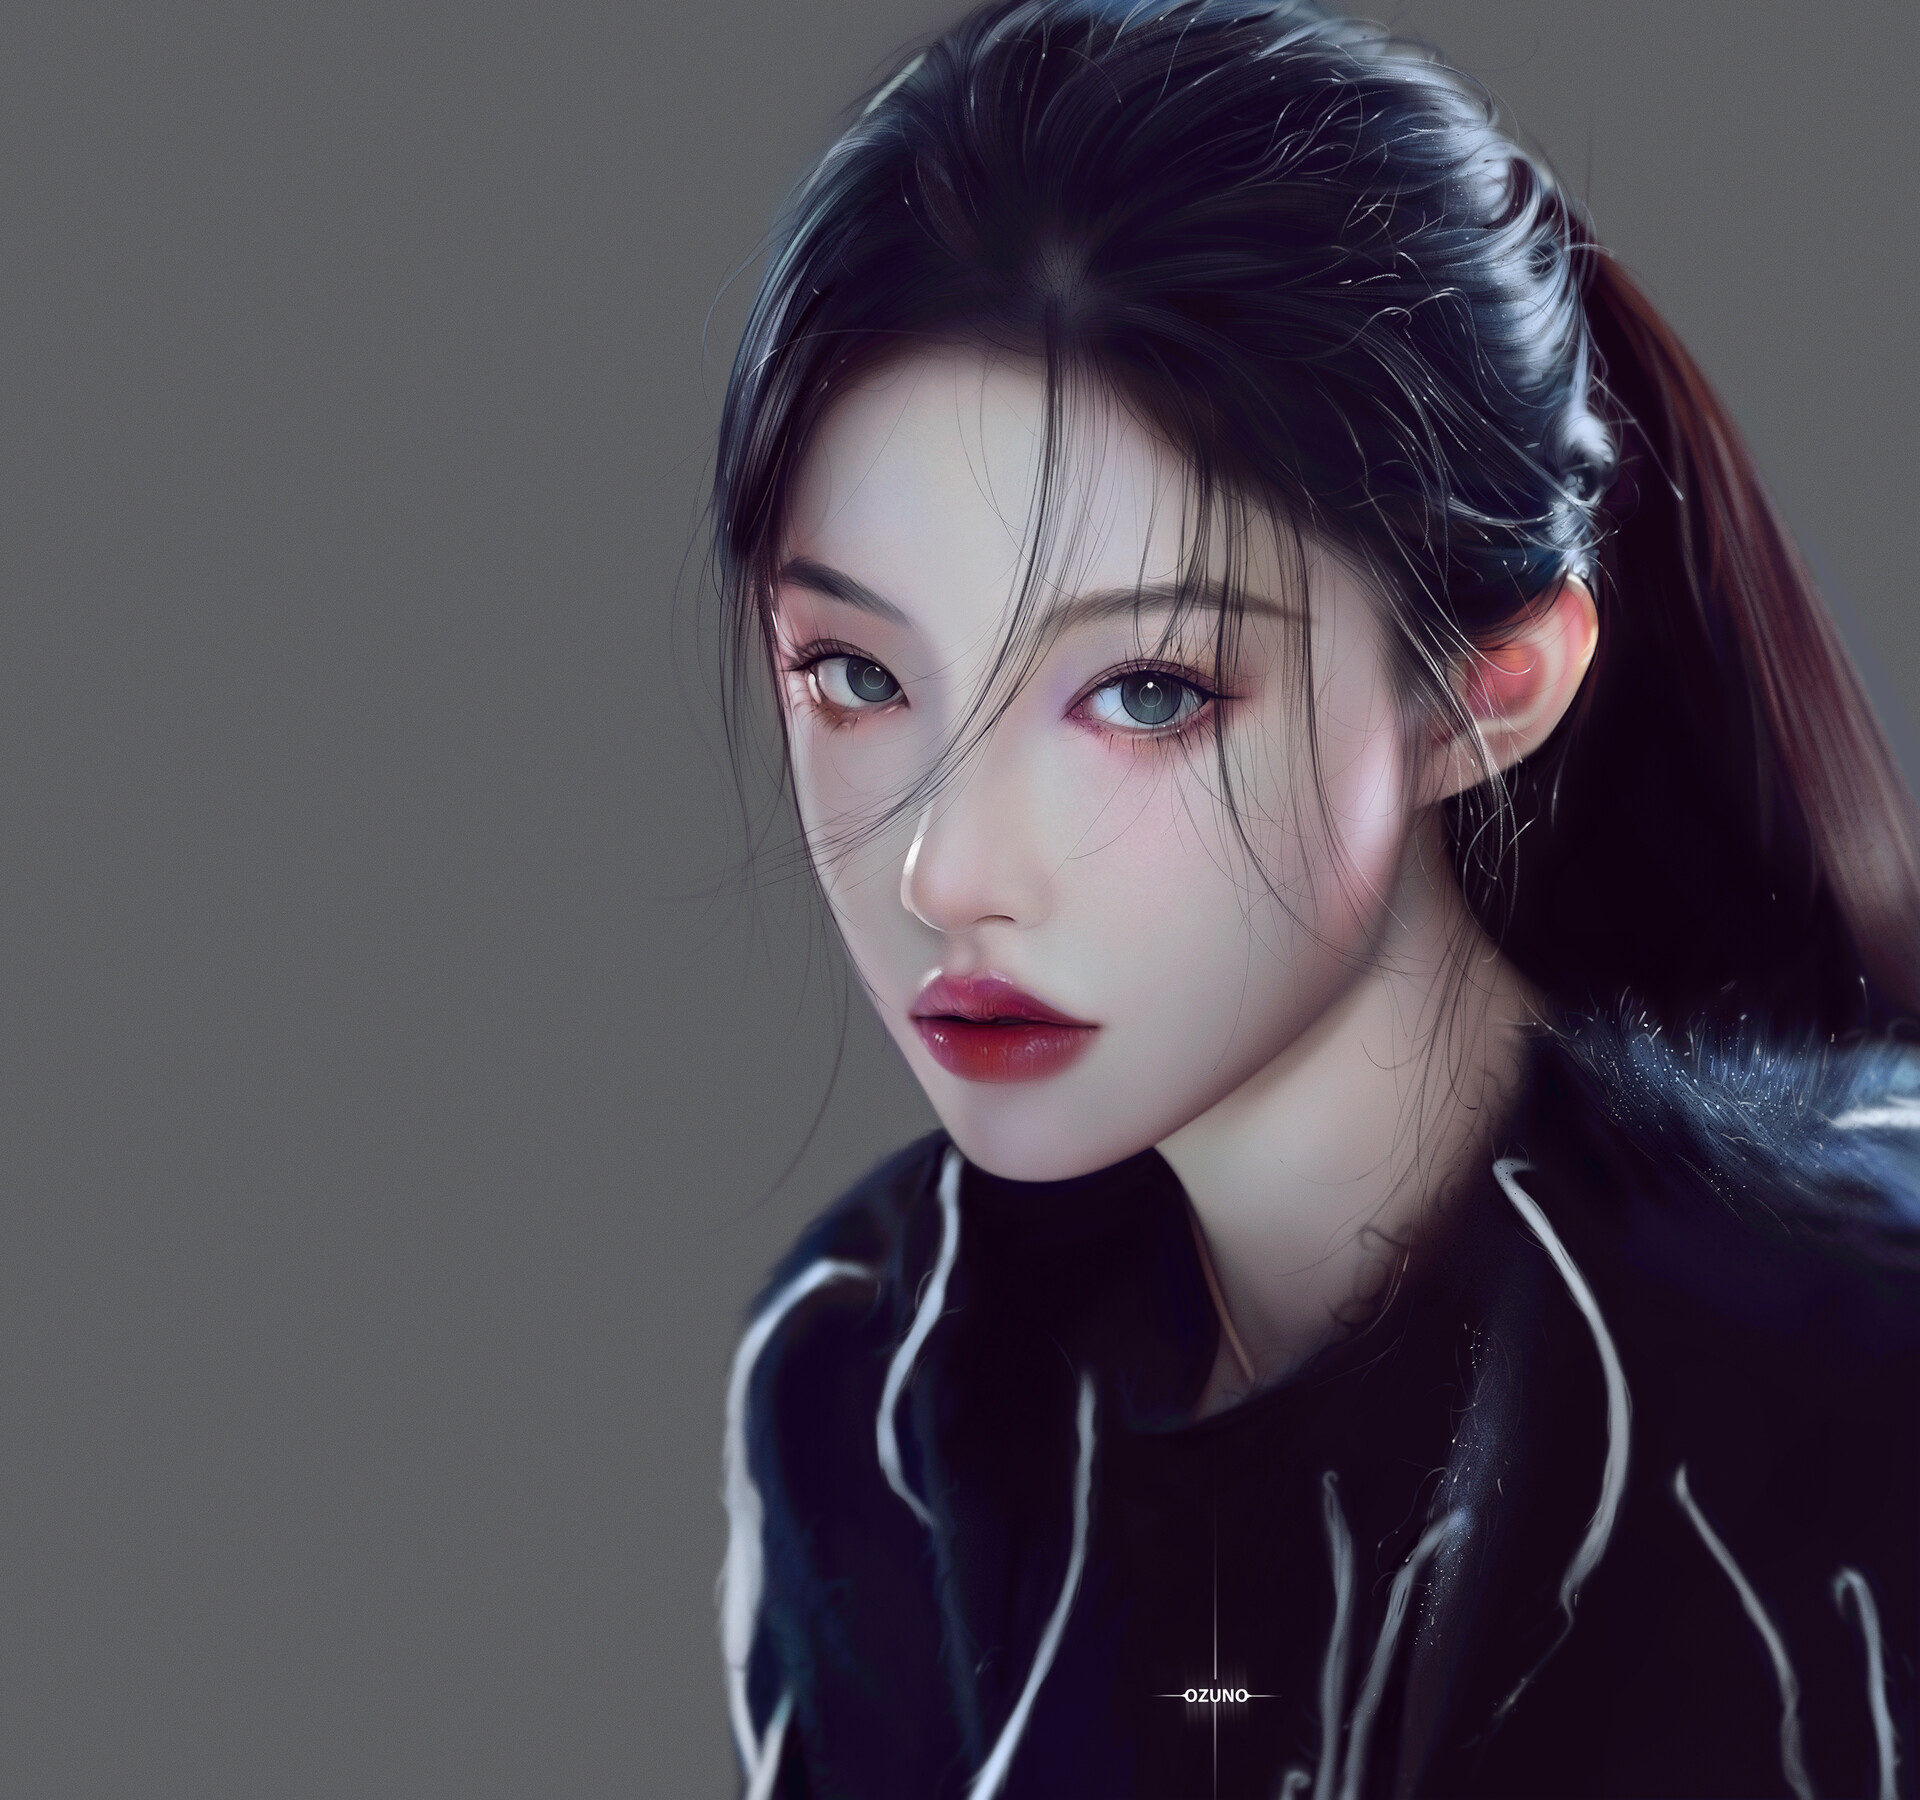 Huy Ozuno Digital Art Artwork Illustration Women Asian Portrait Face Black Hair Red Lipstick Looking 1920x1800